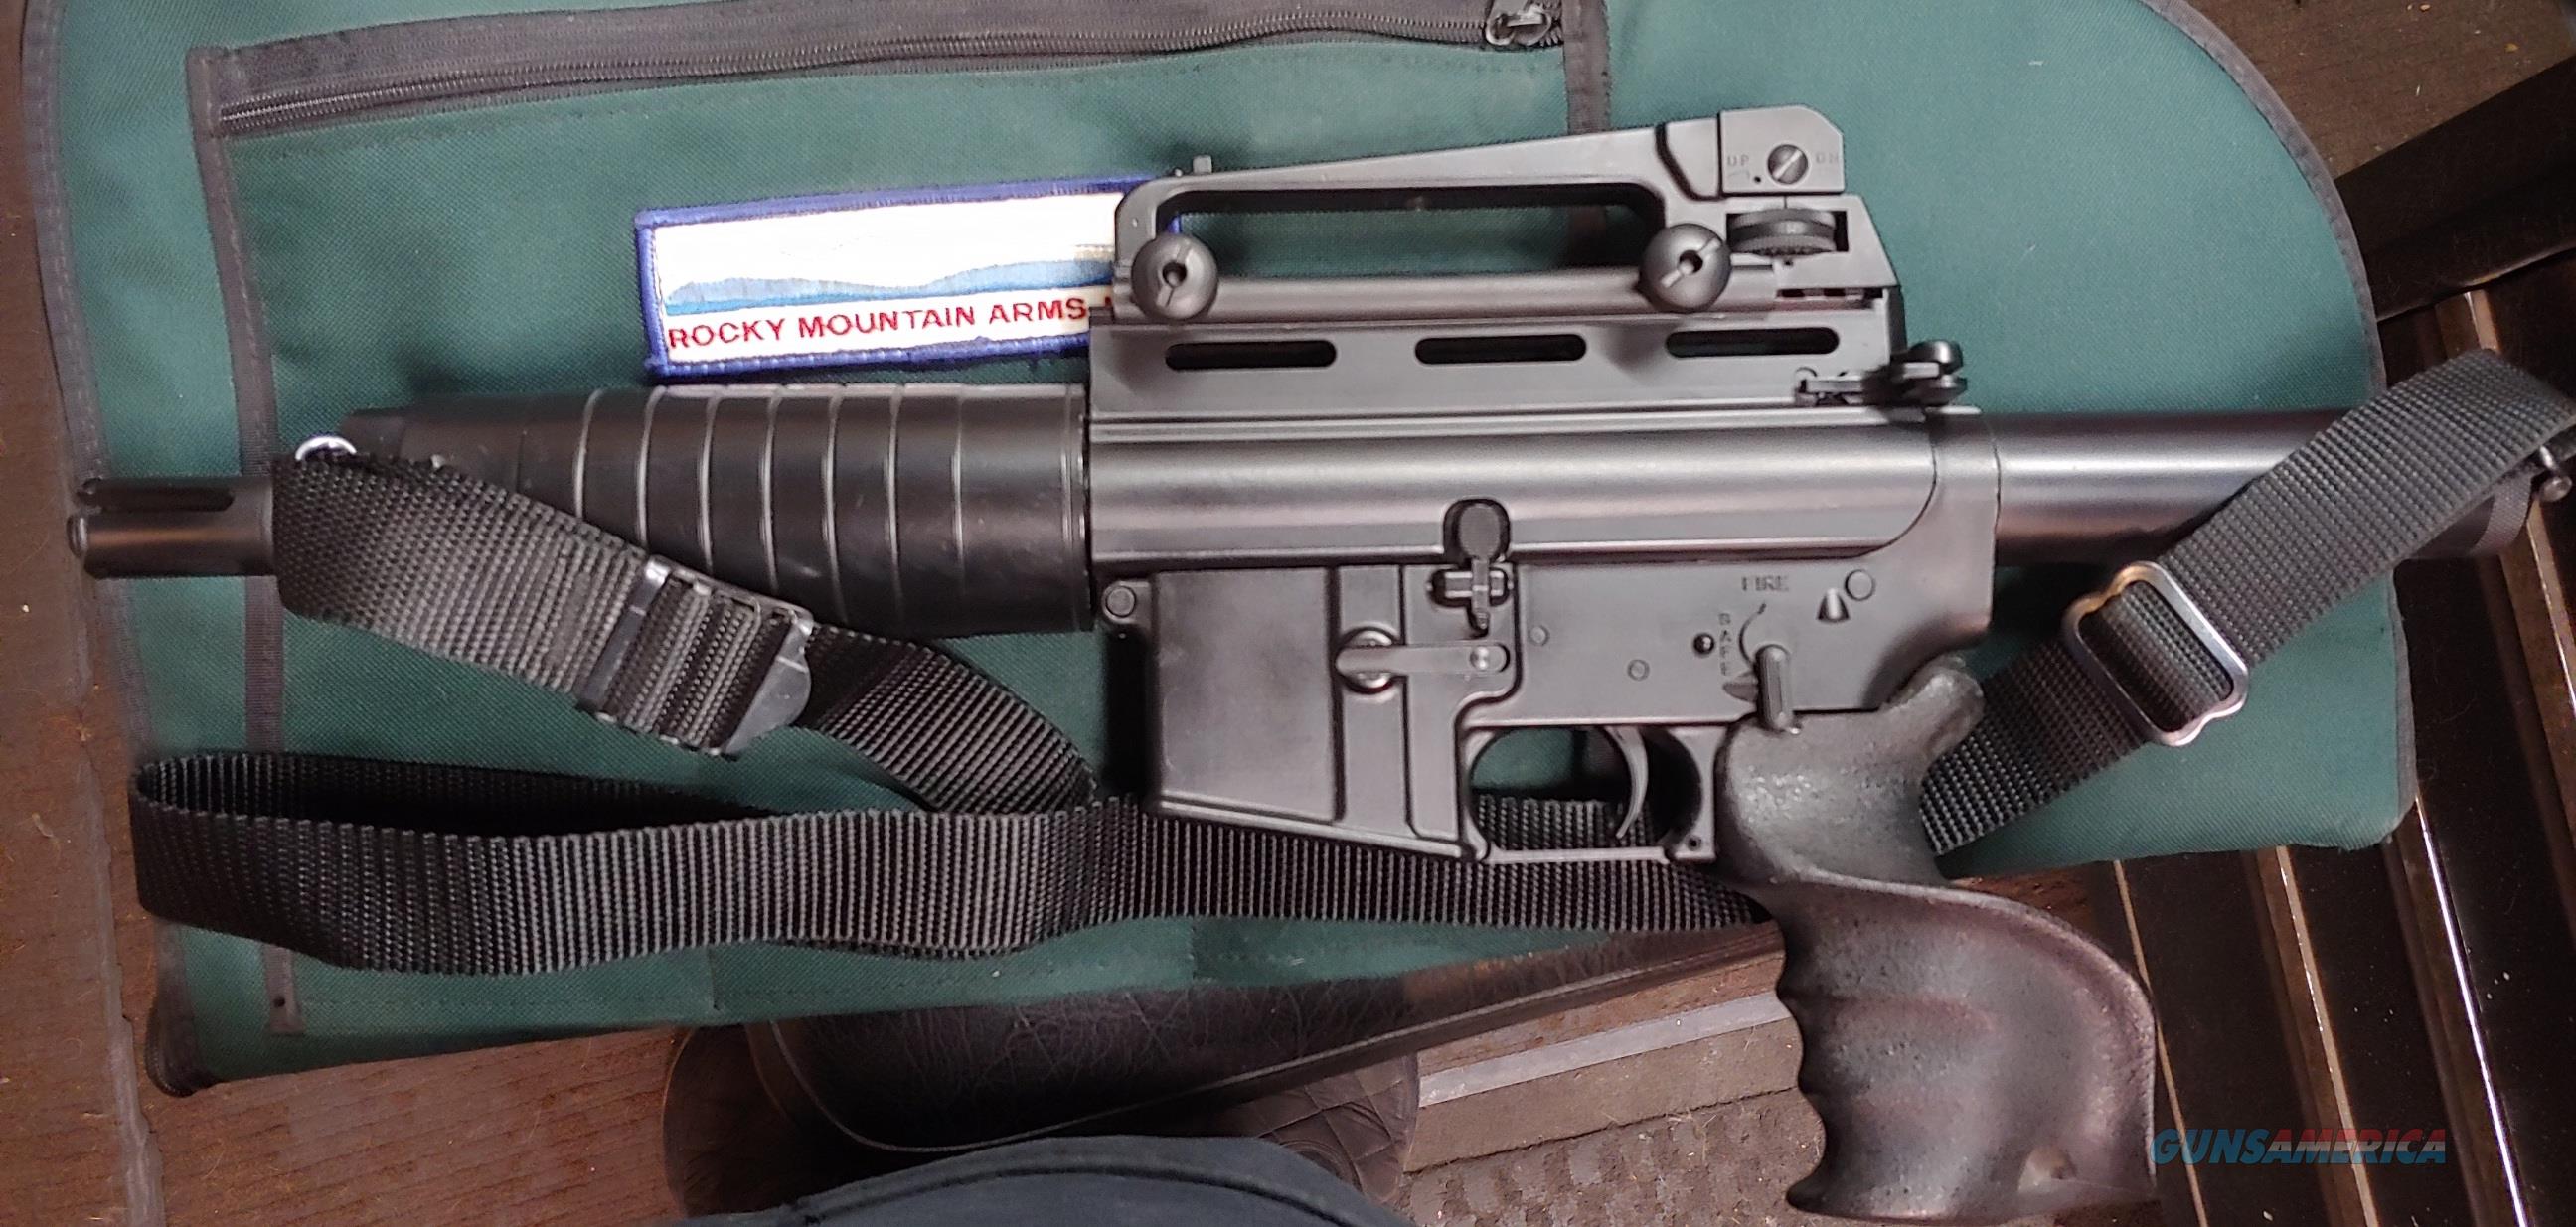 Rocky Mountain Arms Patriot Pistol For Sale At Gunsamerica 949983488